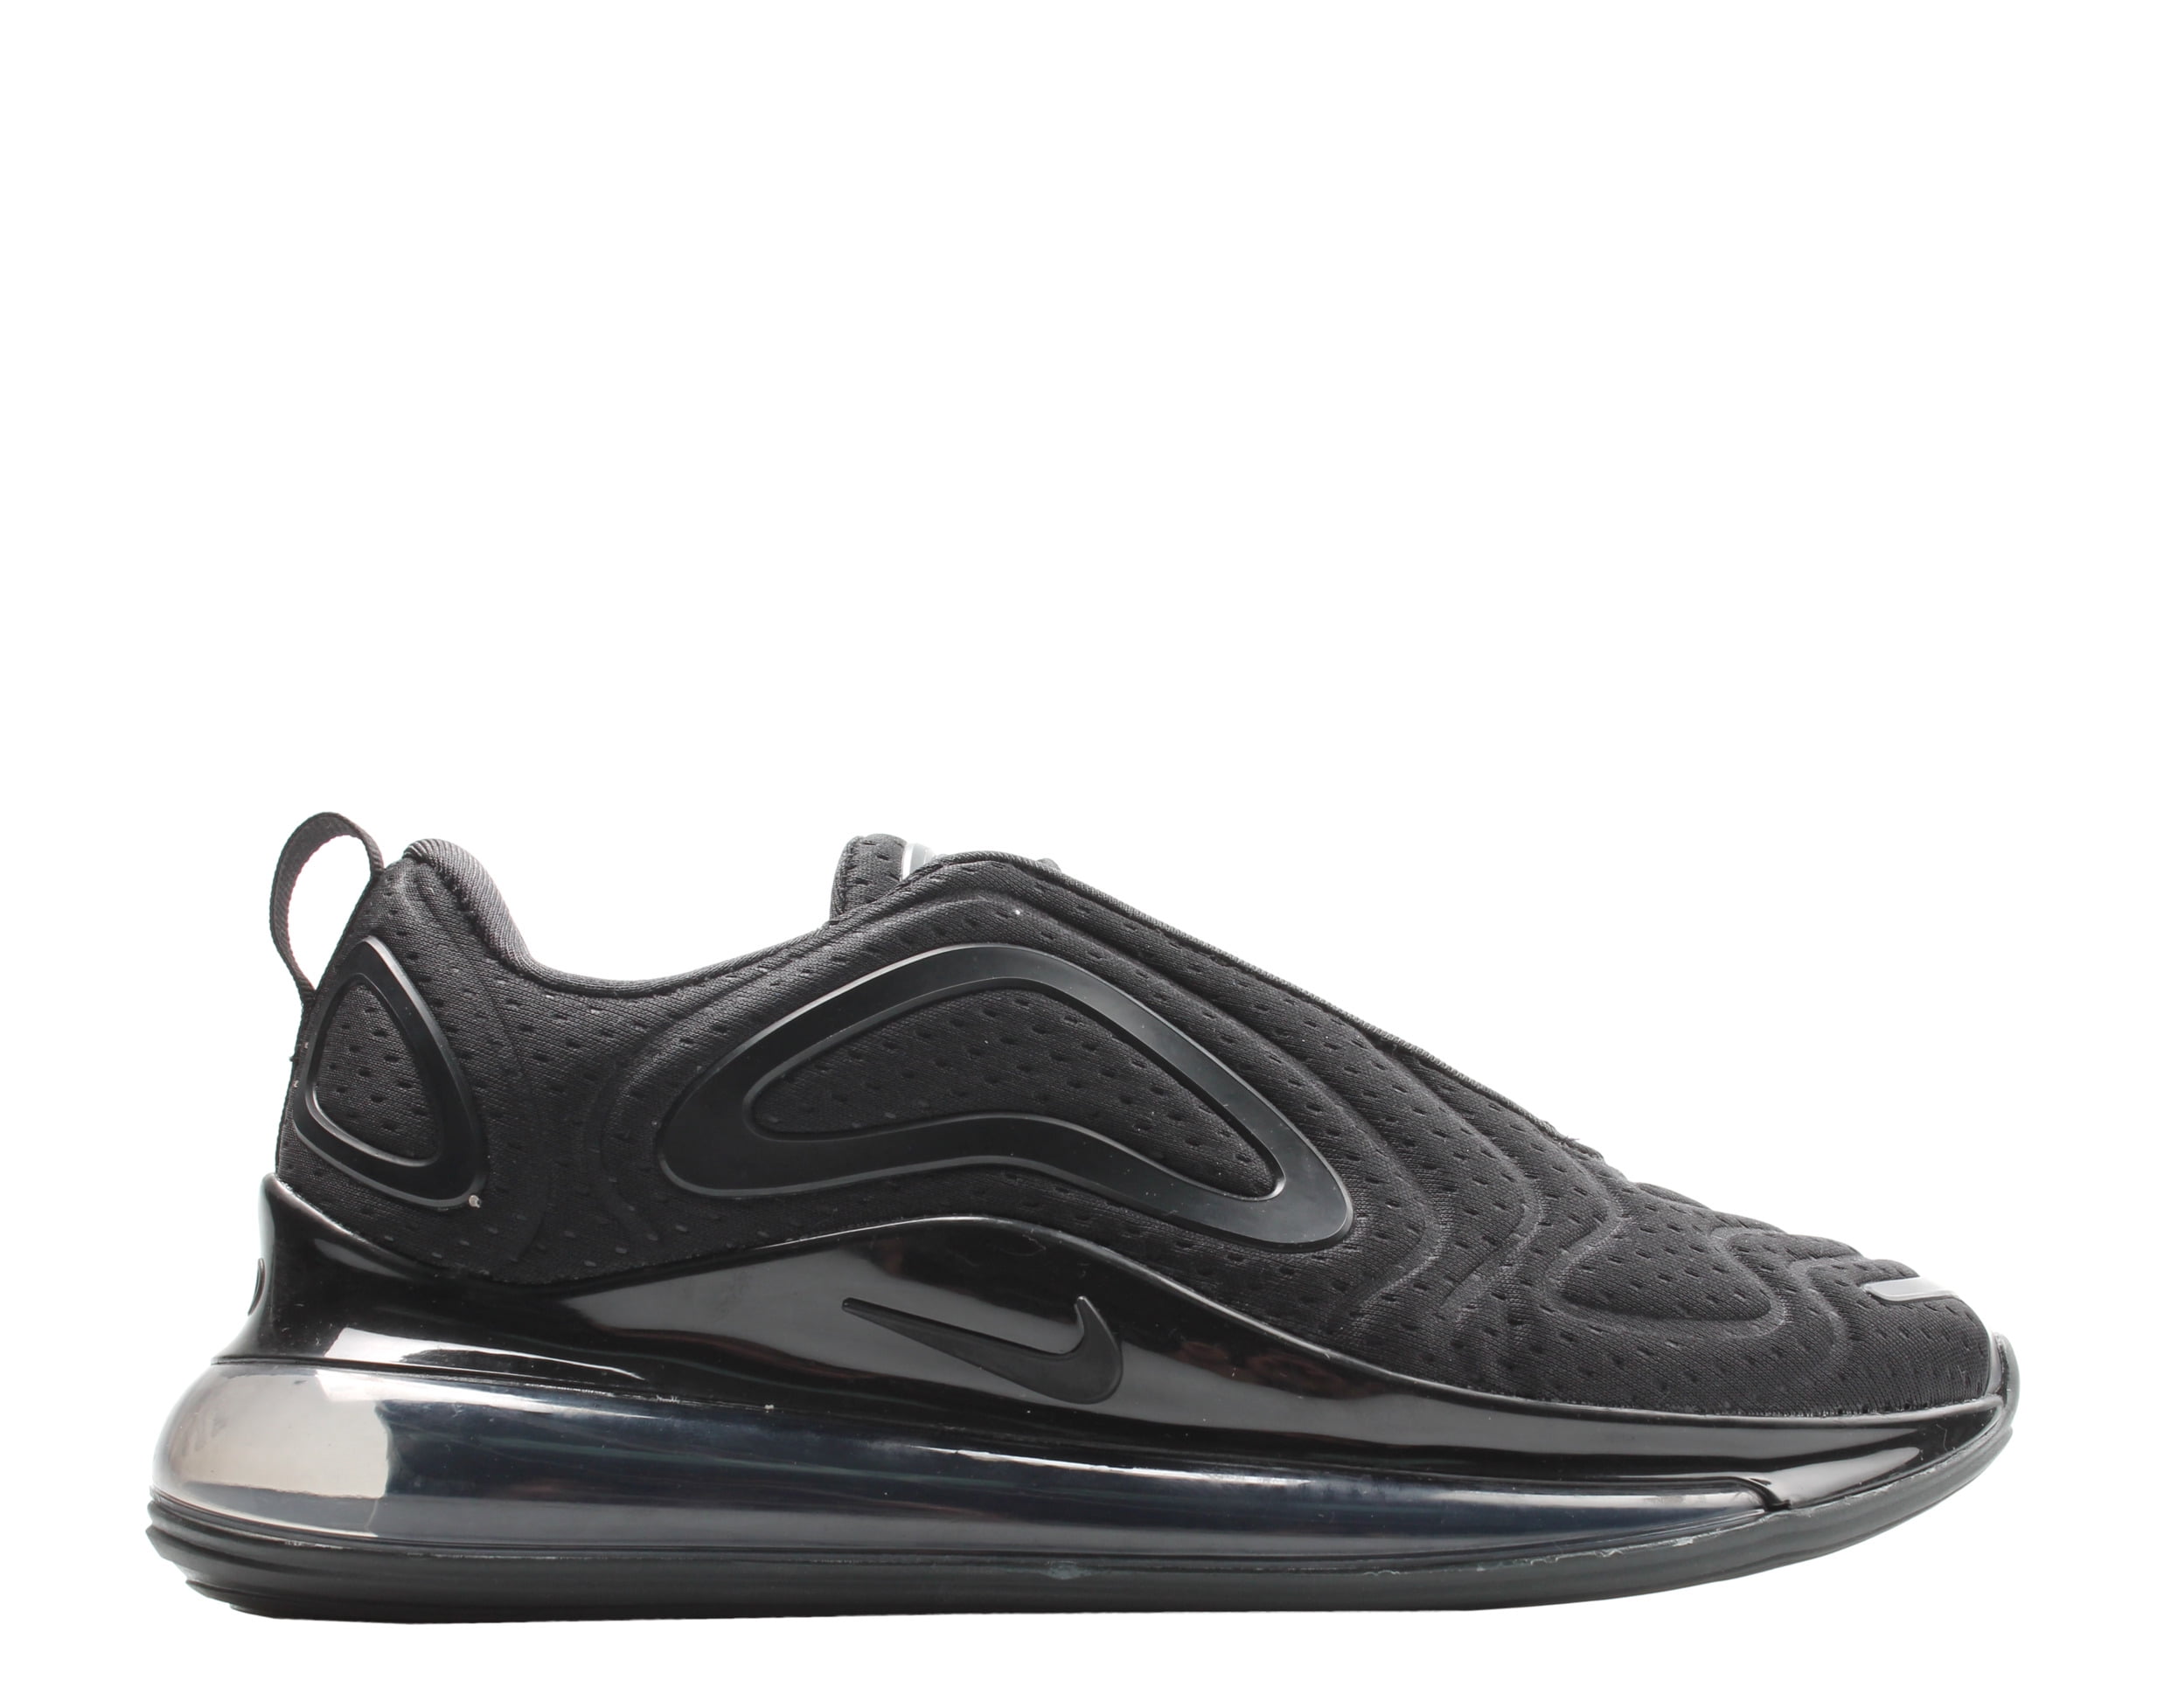 Paralizar Excelente Descortés Nike Air Max 720 Men's Running Shoes Size 12.5 - Walmart.com